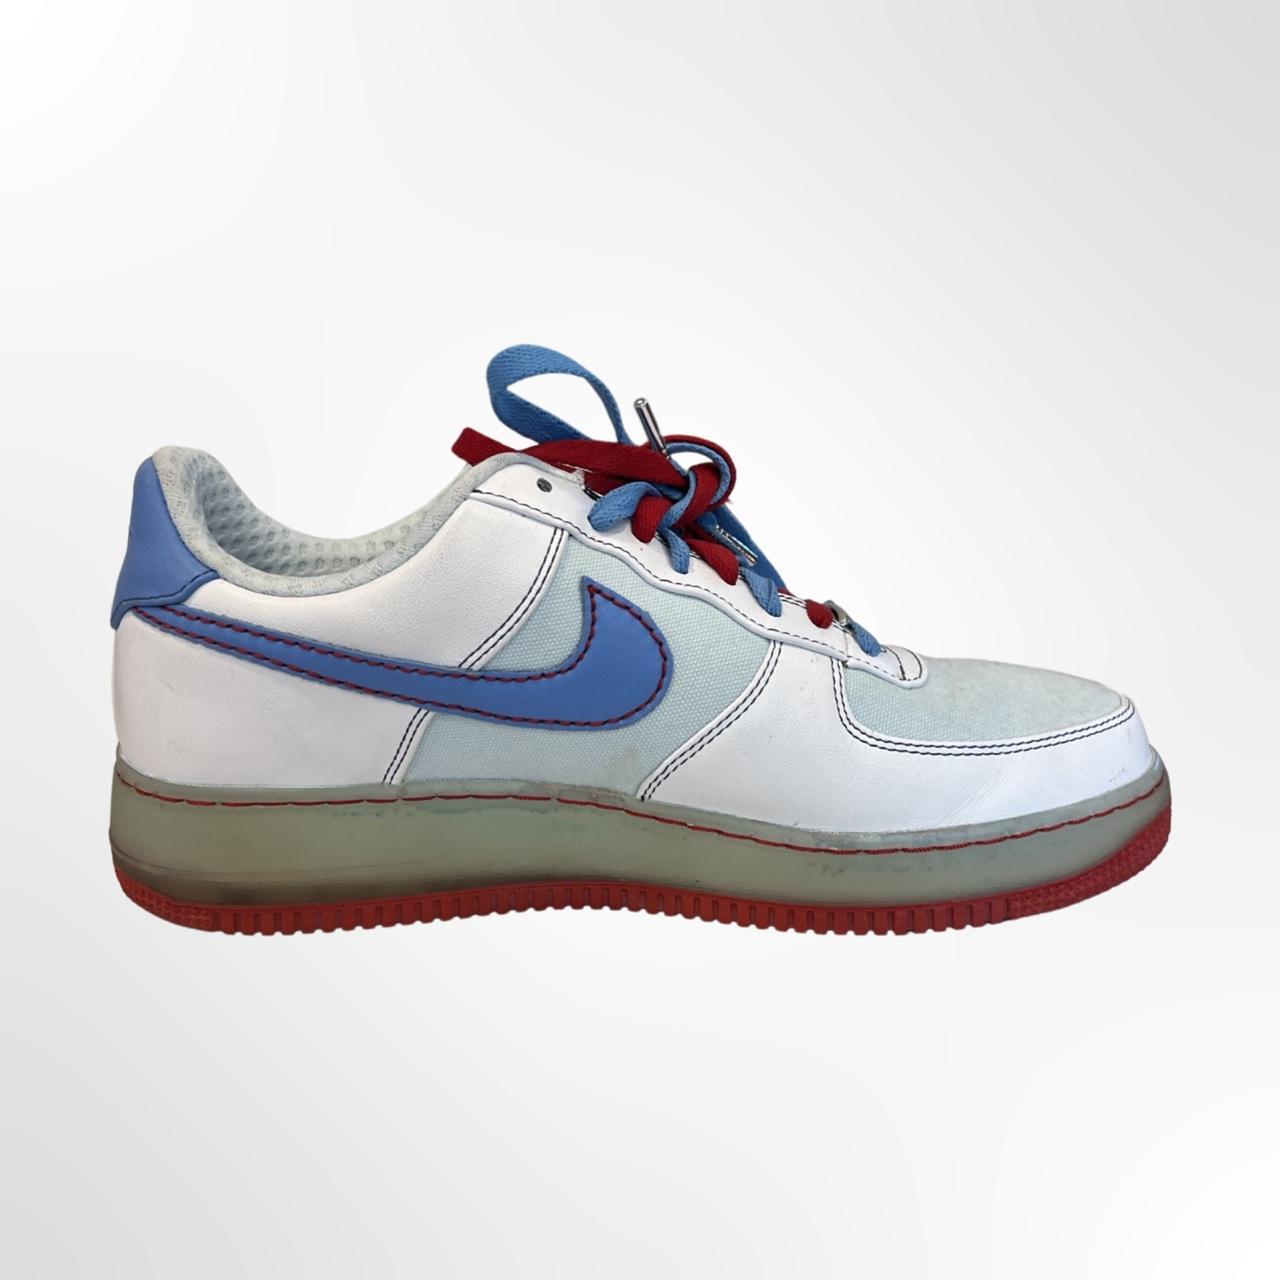 Nike Men's Sneakers - Blue - US 9